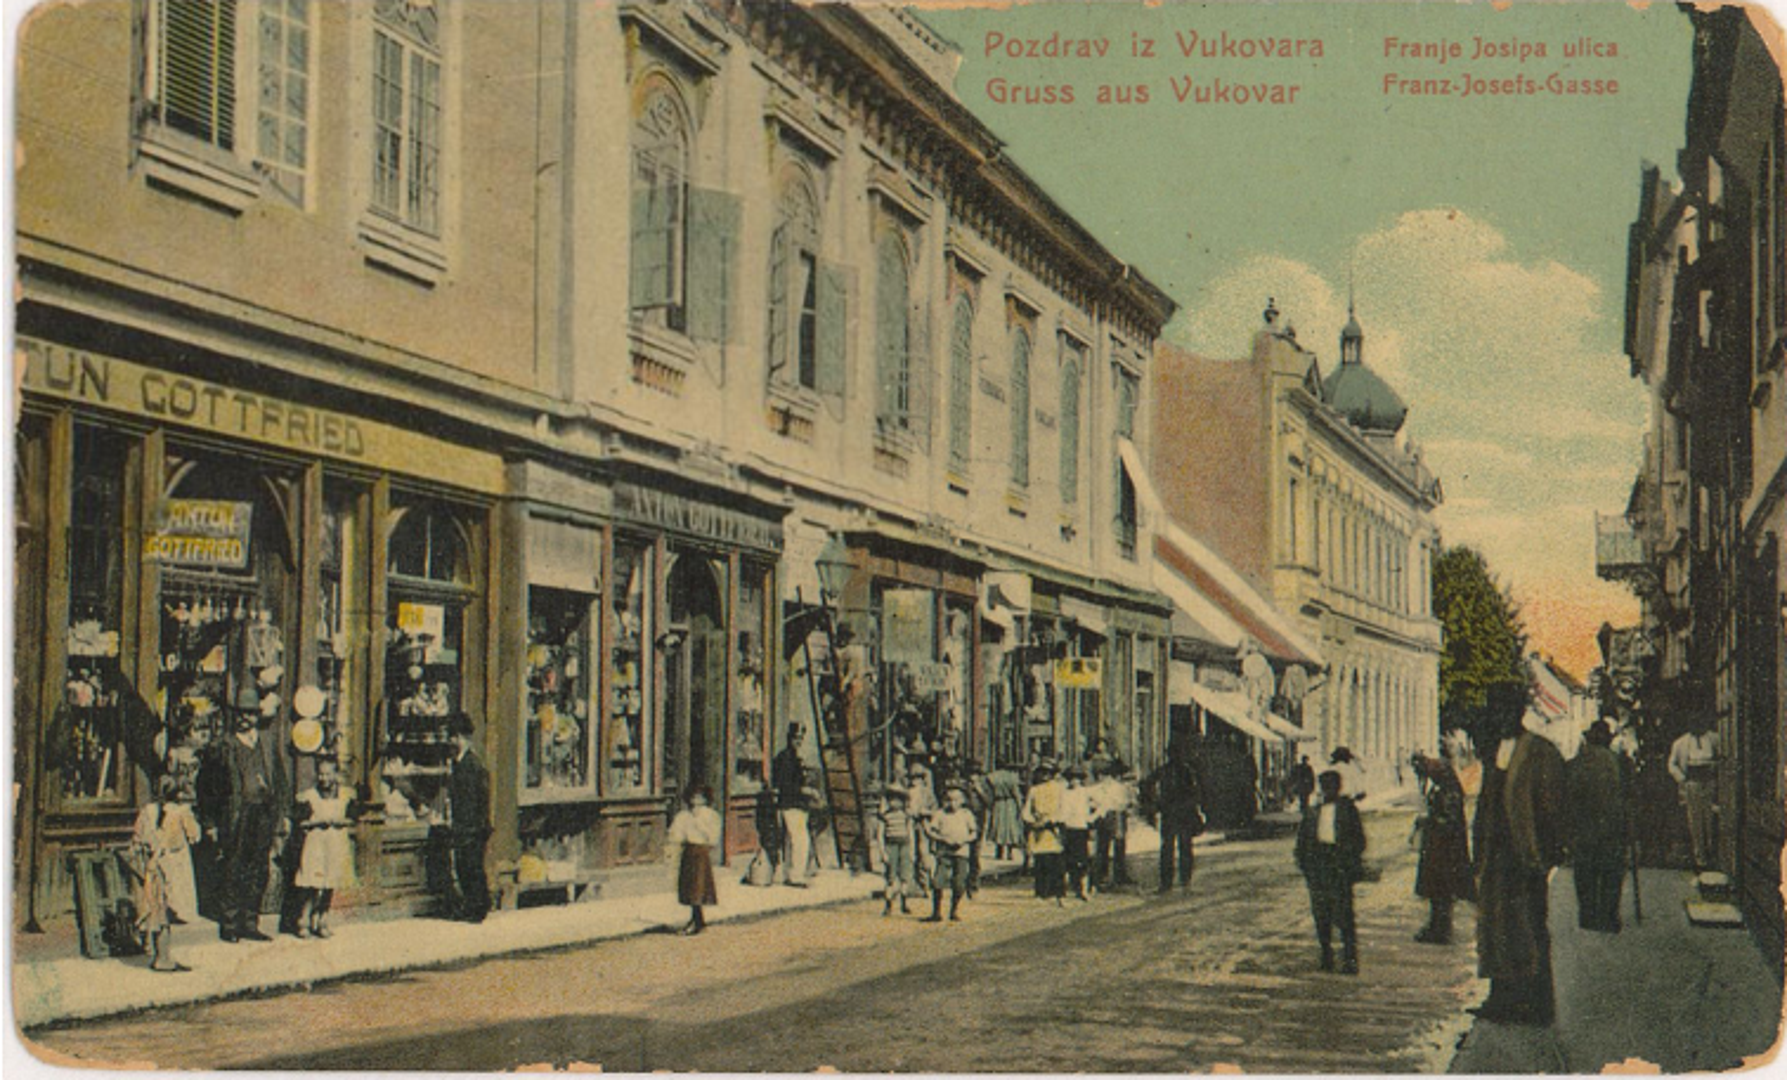 Razglednica Vukovara tiskana 1910. godine iz fonda Grafičke zbirke Nacionalne i sveučilišne knjižnice u Zagrebu